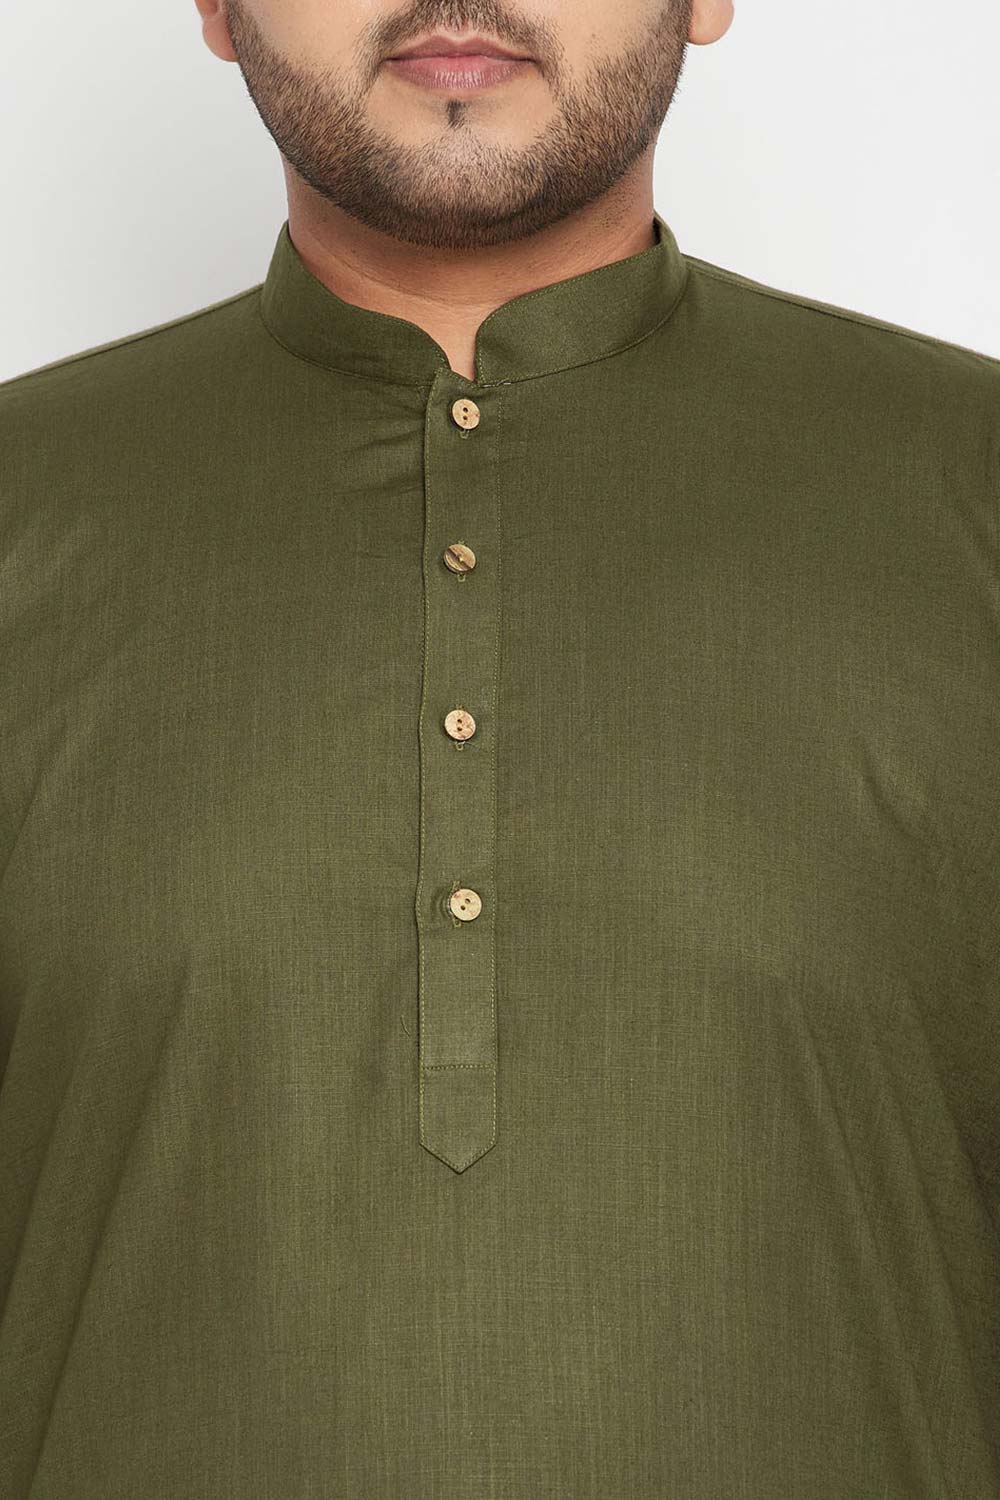 Buy Men's Cotton Blend Solid Kurta Set in Mint Green - Zoom in